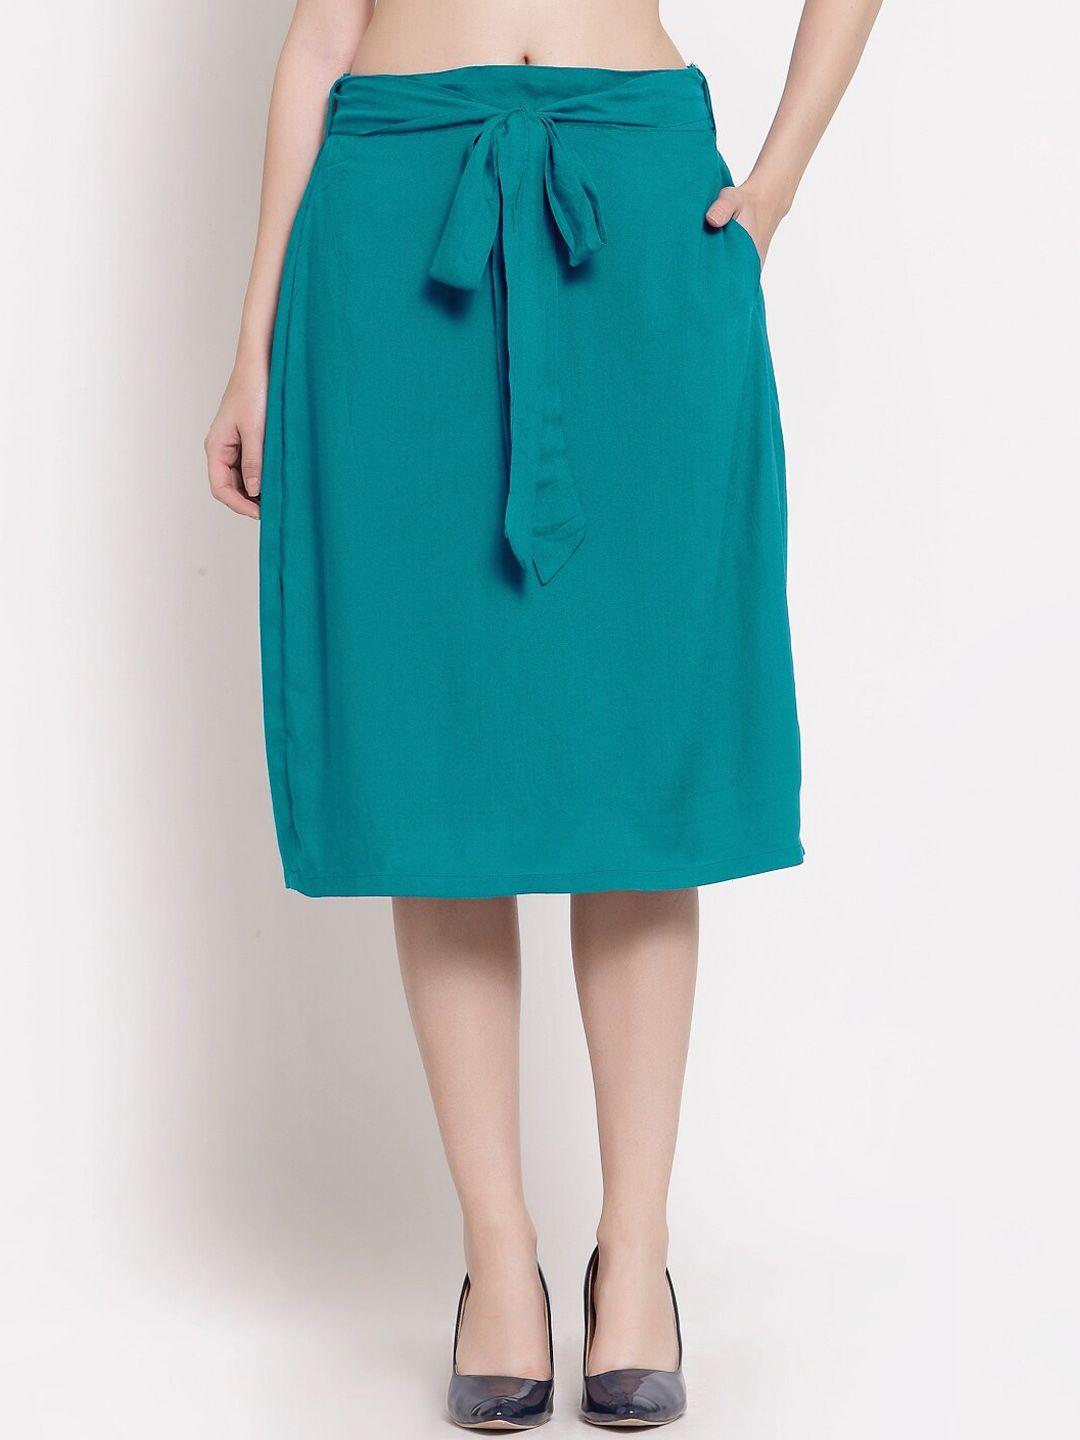 patrorna women plus size teal blue solid knee length skirt